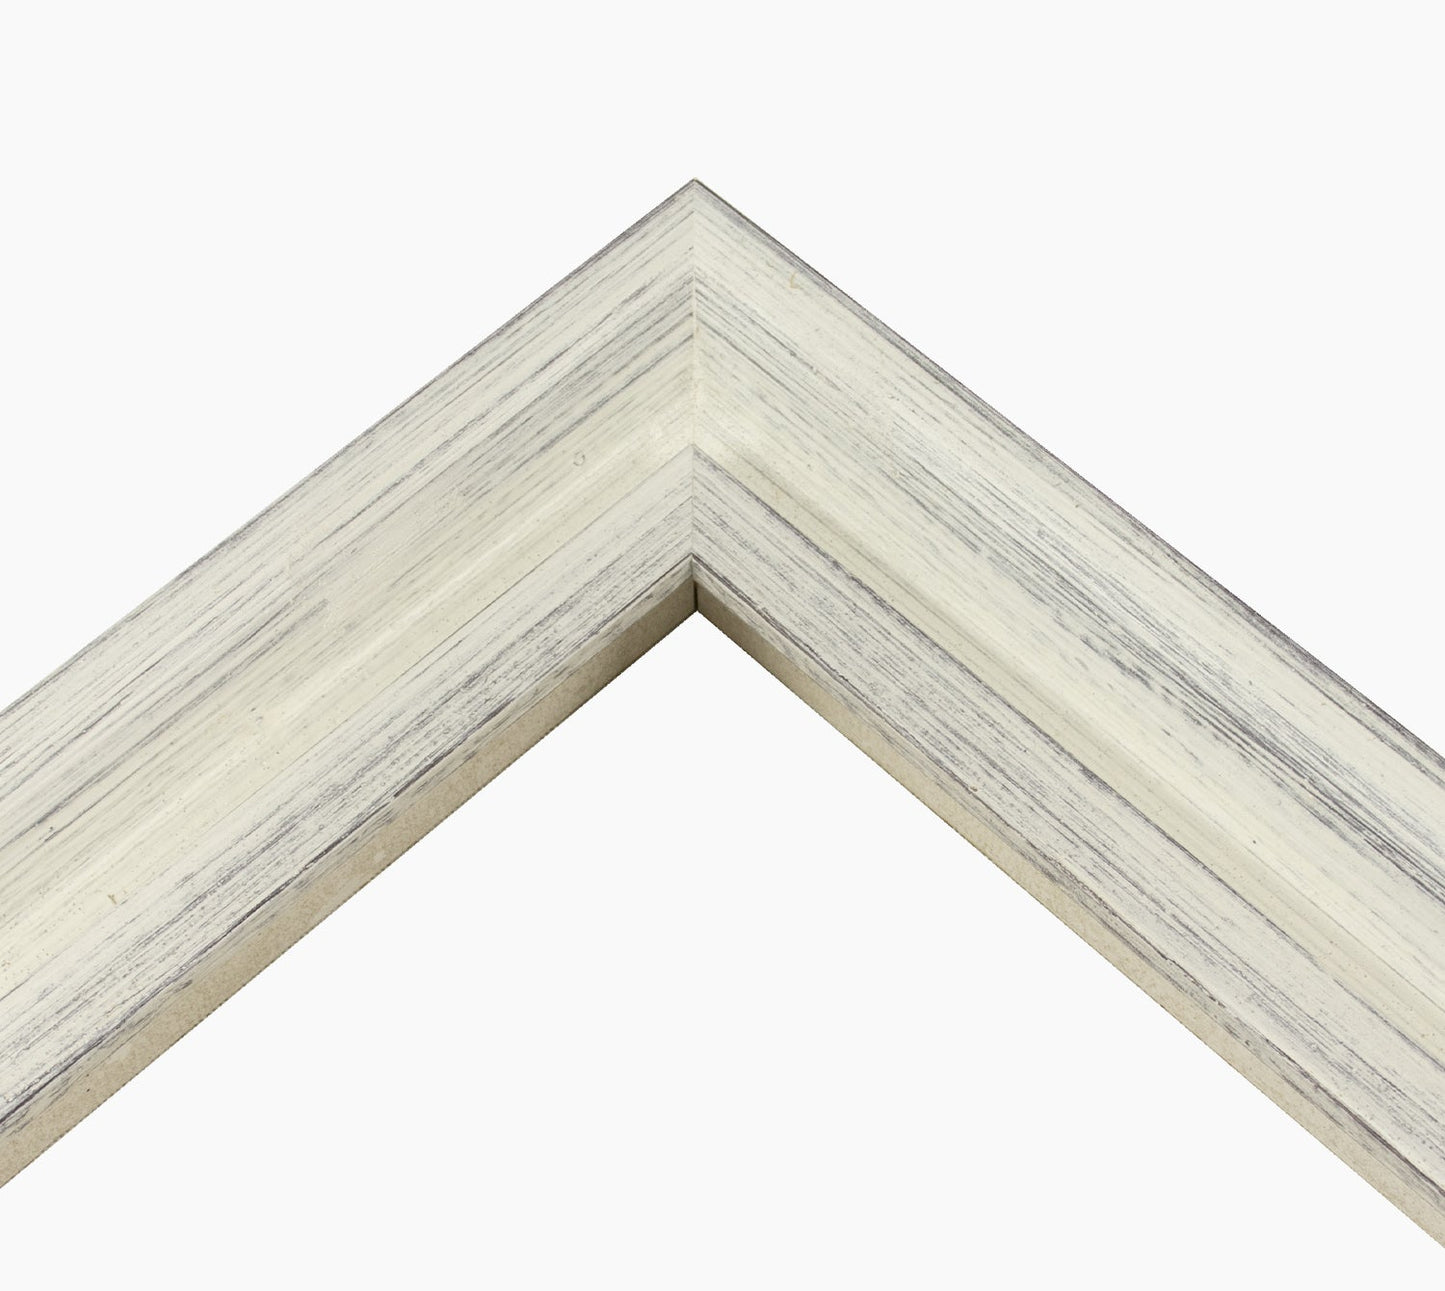 229.920 cadre en bois blanc avec fond marron  mesure de profil 45x45 mm Lombarda cornici S.n.c.